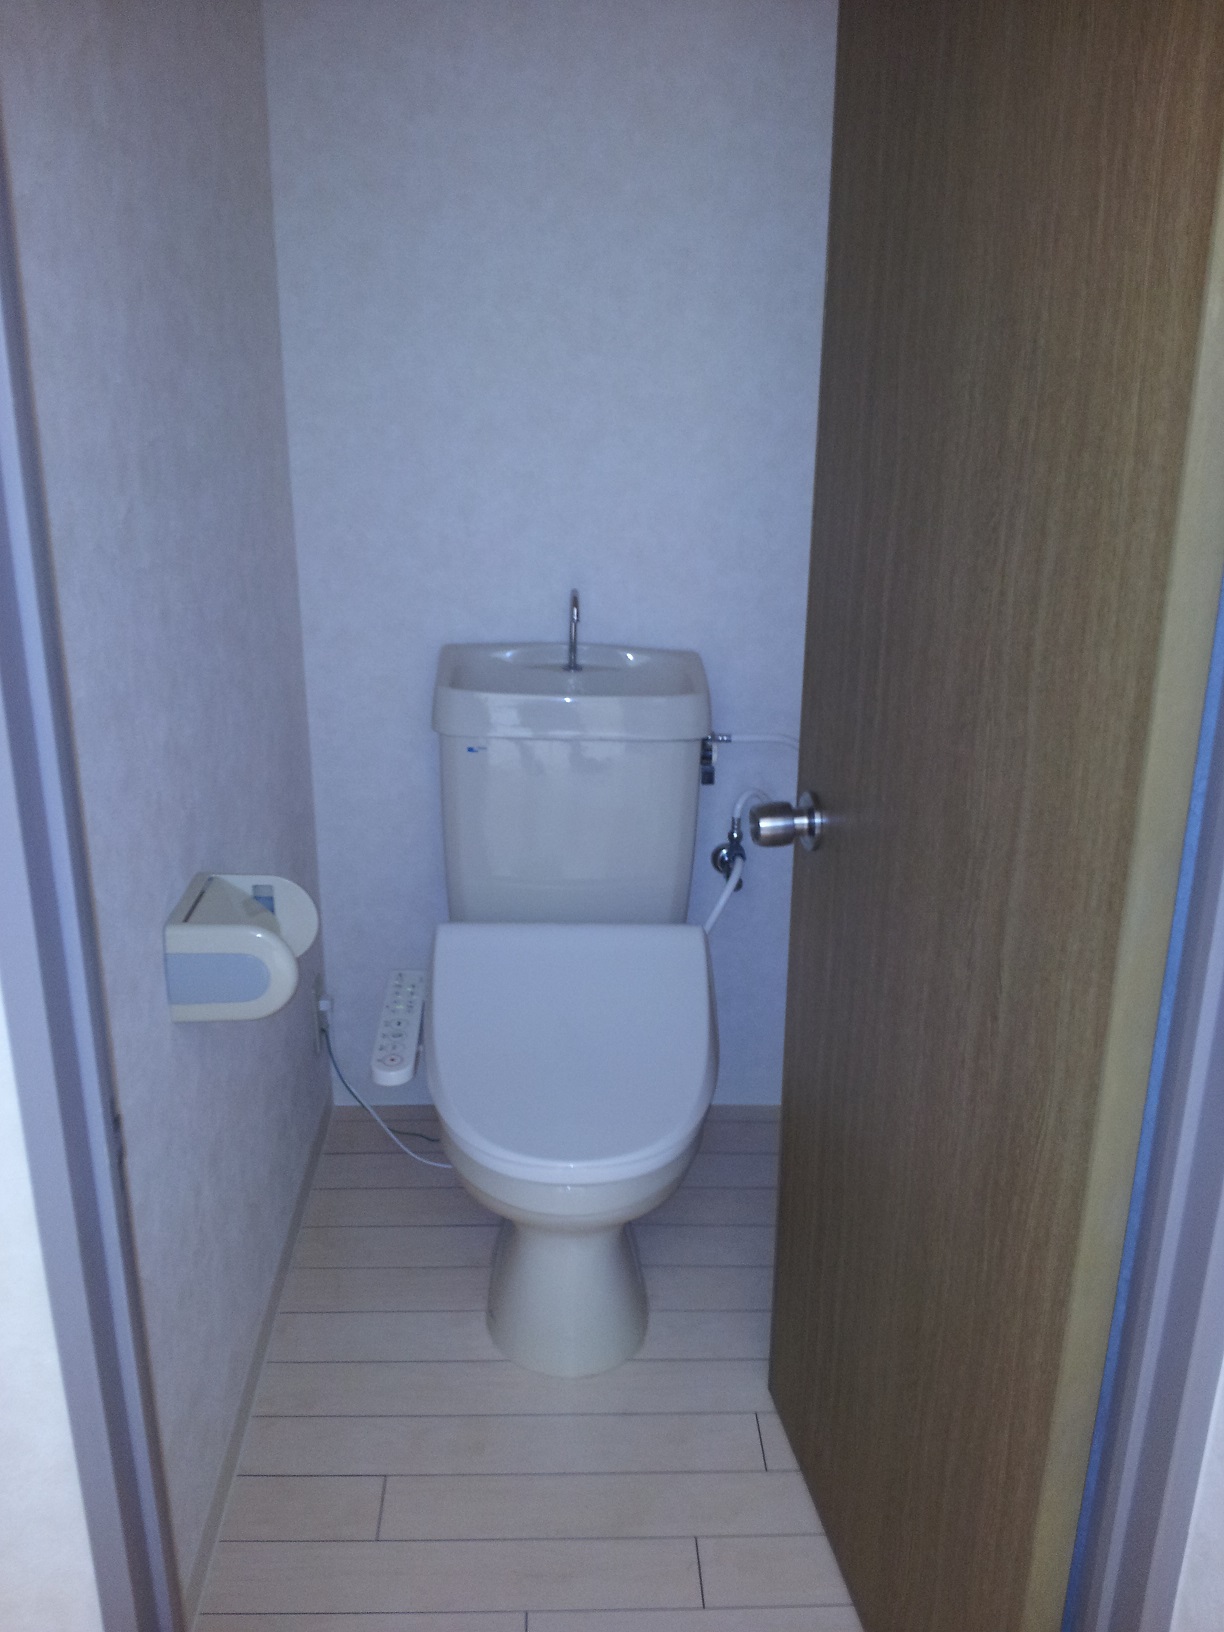 Toilet. With washing heating toilet seat